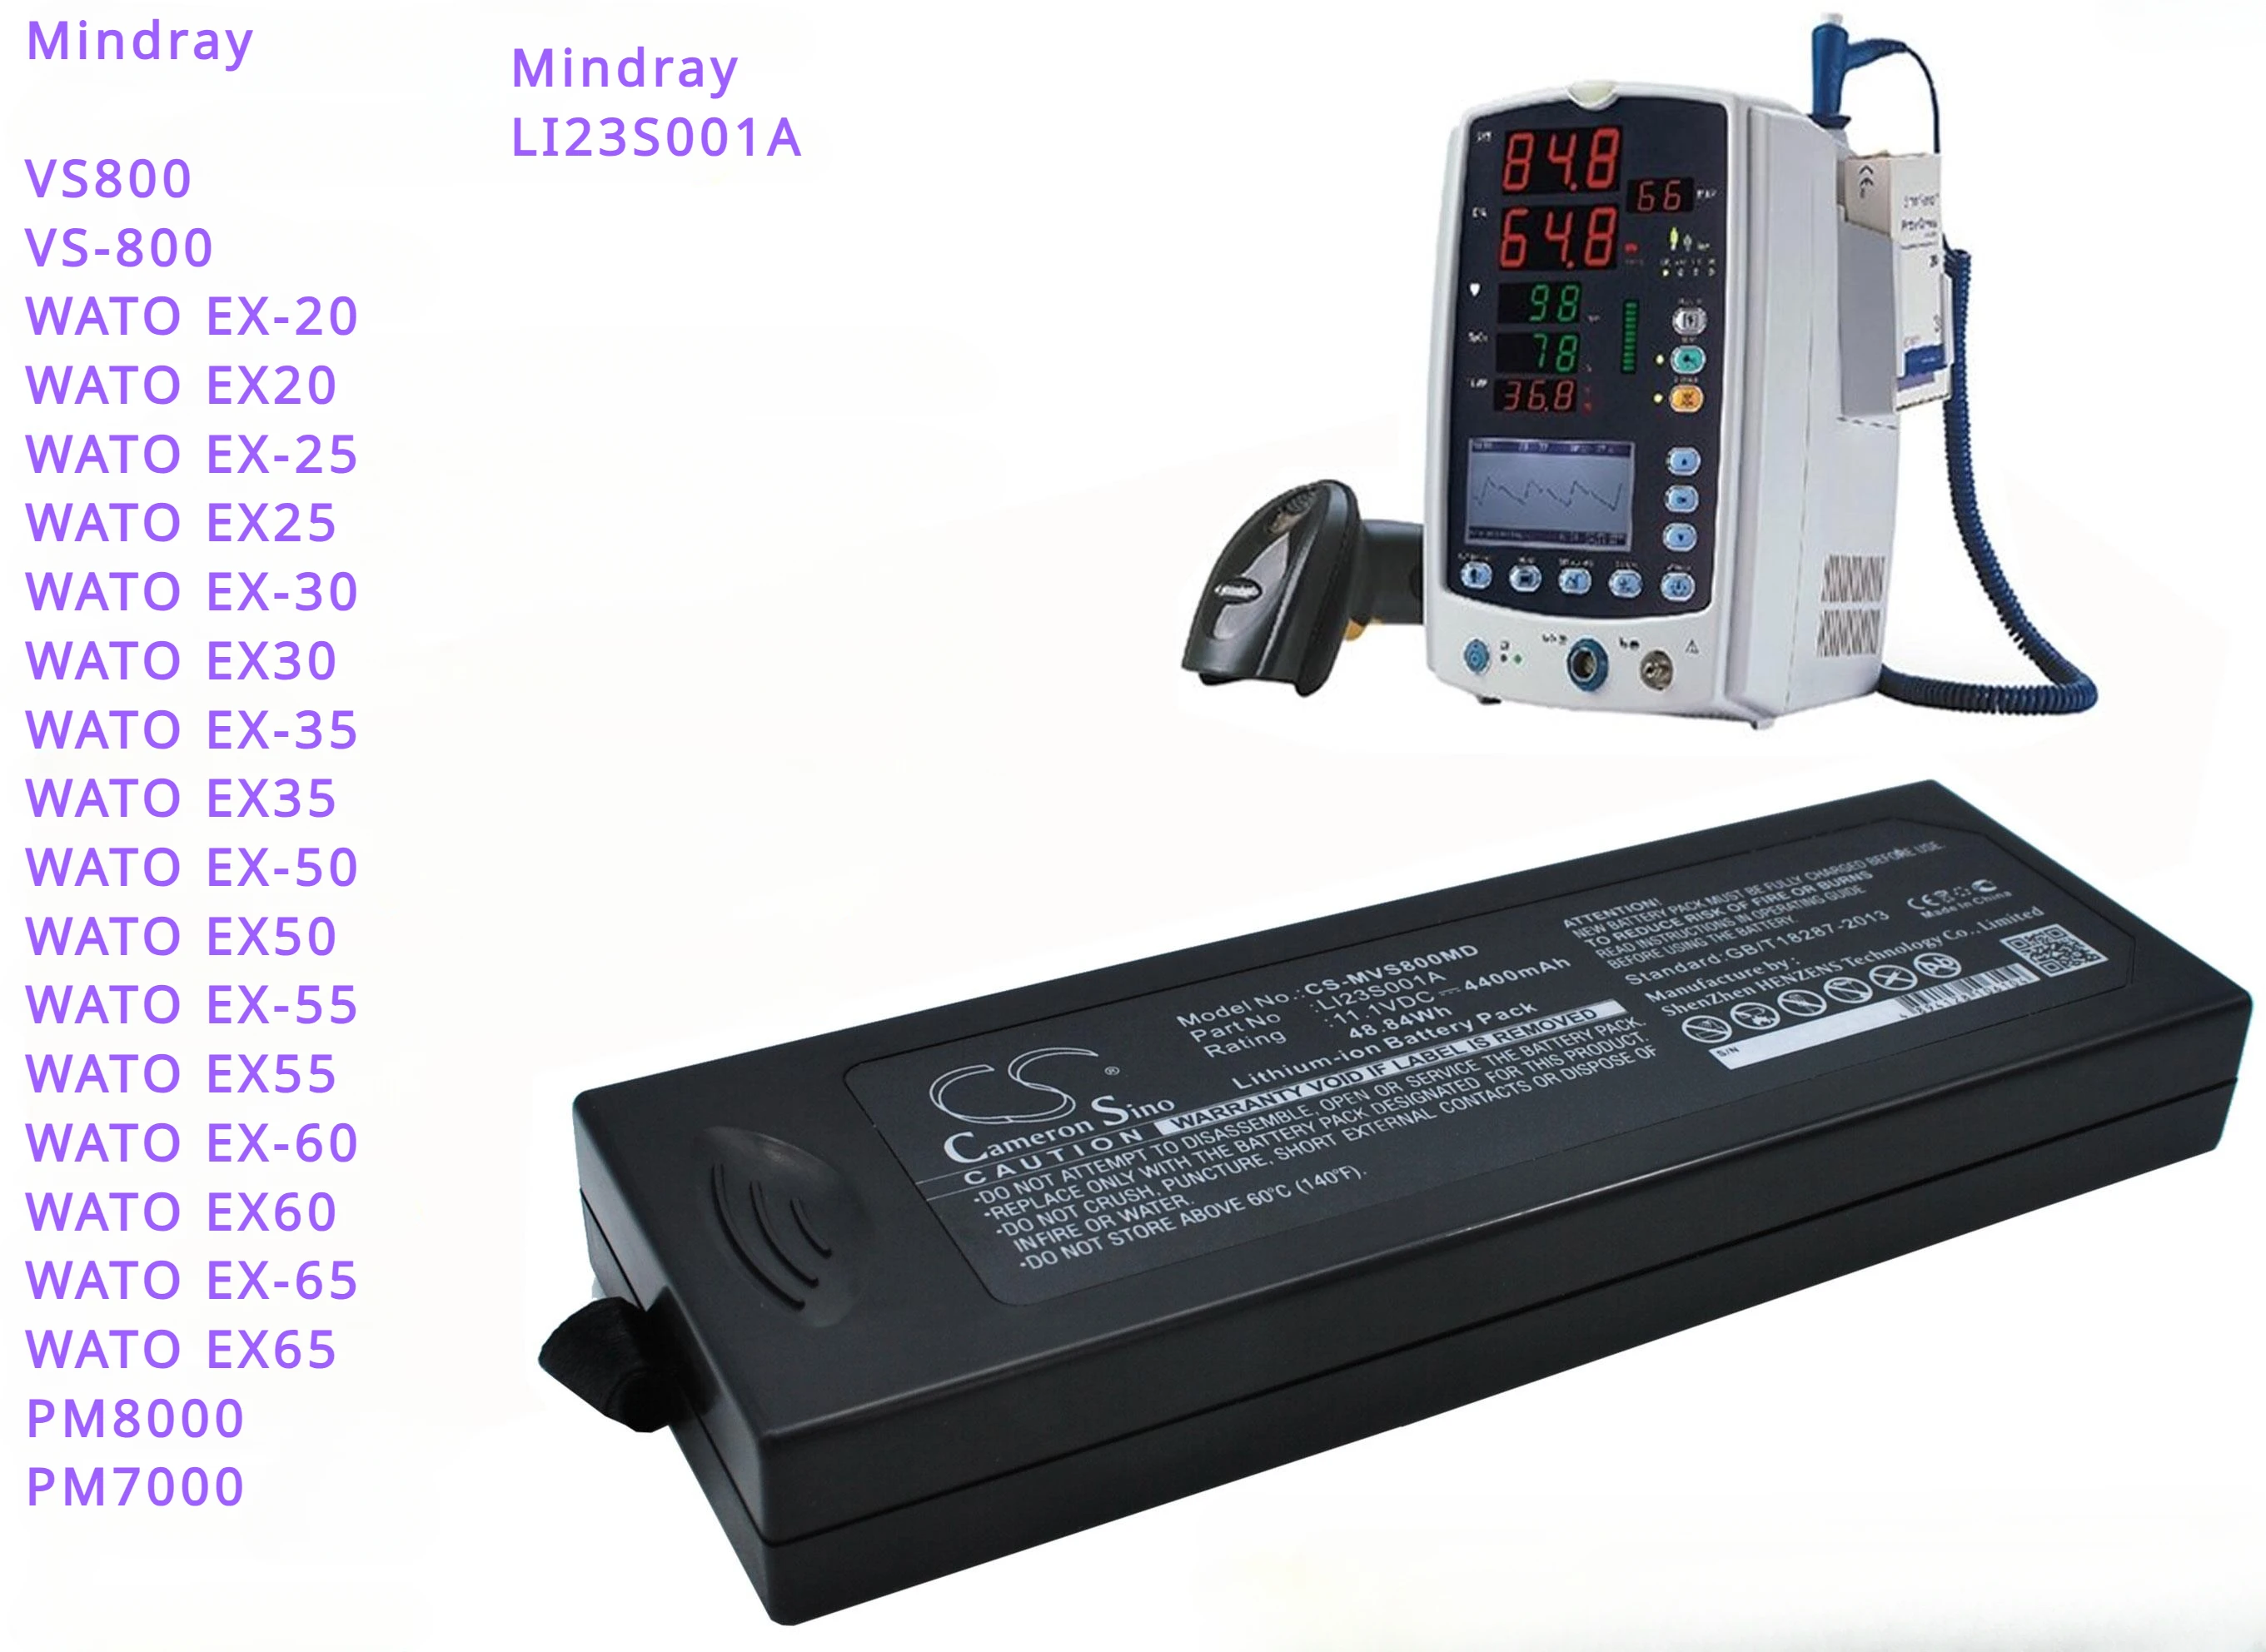 

CS 4400mAh/6400mAh Patient Monitor Battery for Mindray WATO EX50, EX-60, EX60, EX-65, EX65, PM8000, PM7000